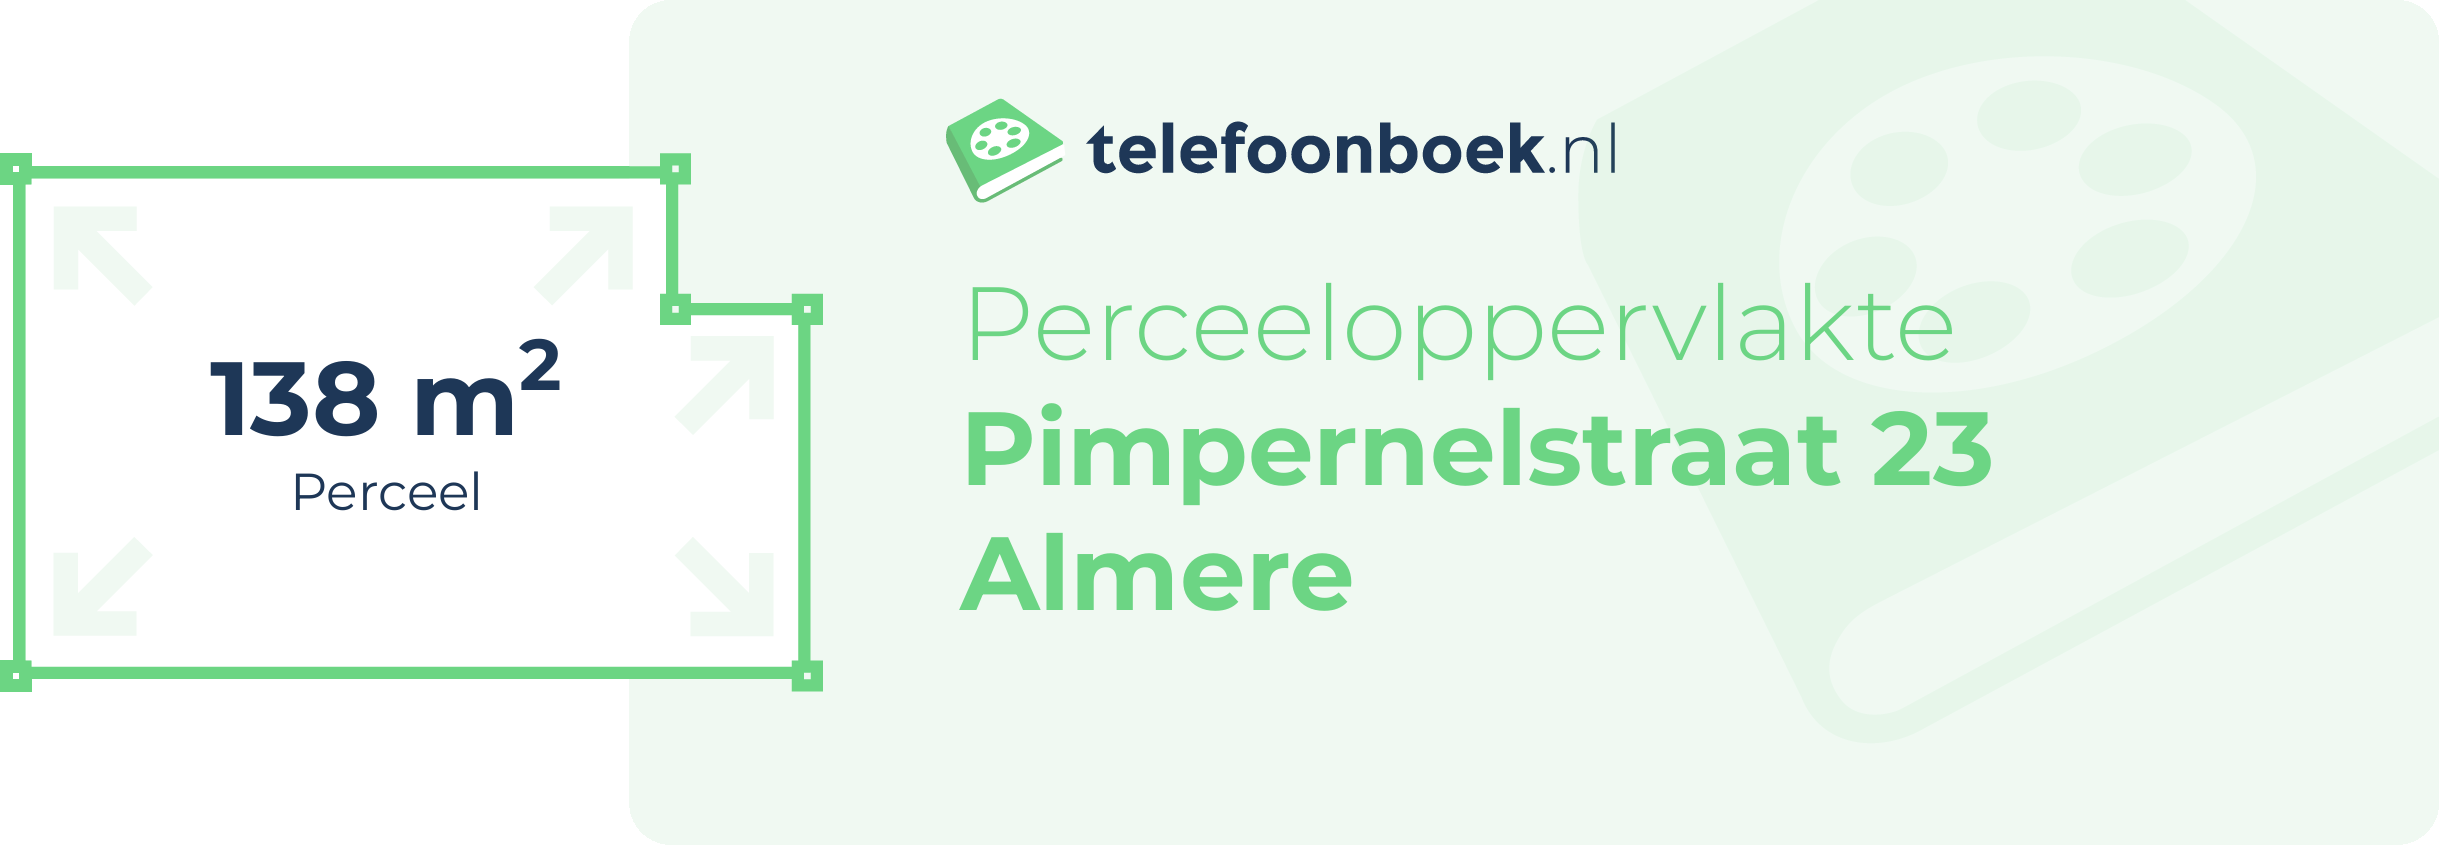 Perceeloppervlakte Pimpernelstraat 23 Almere